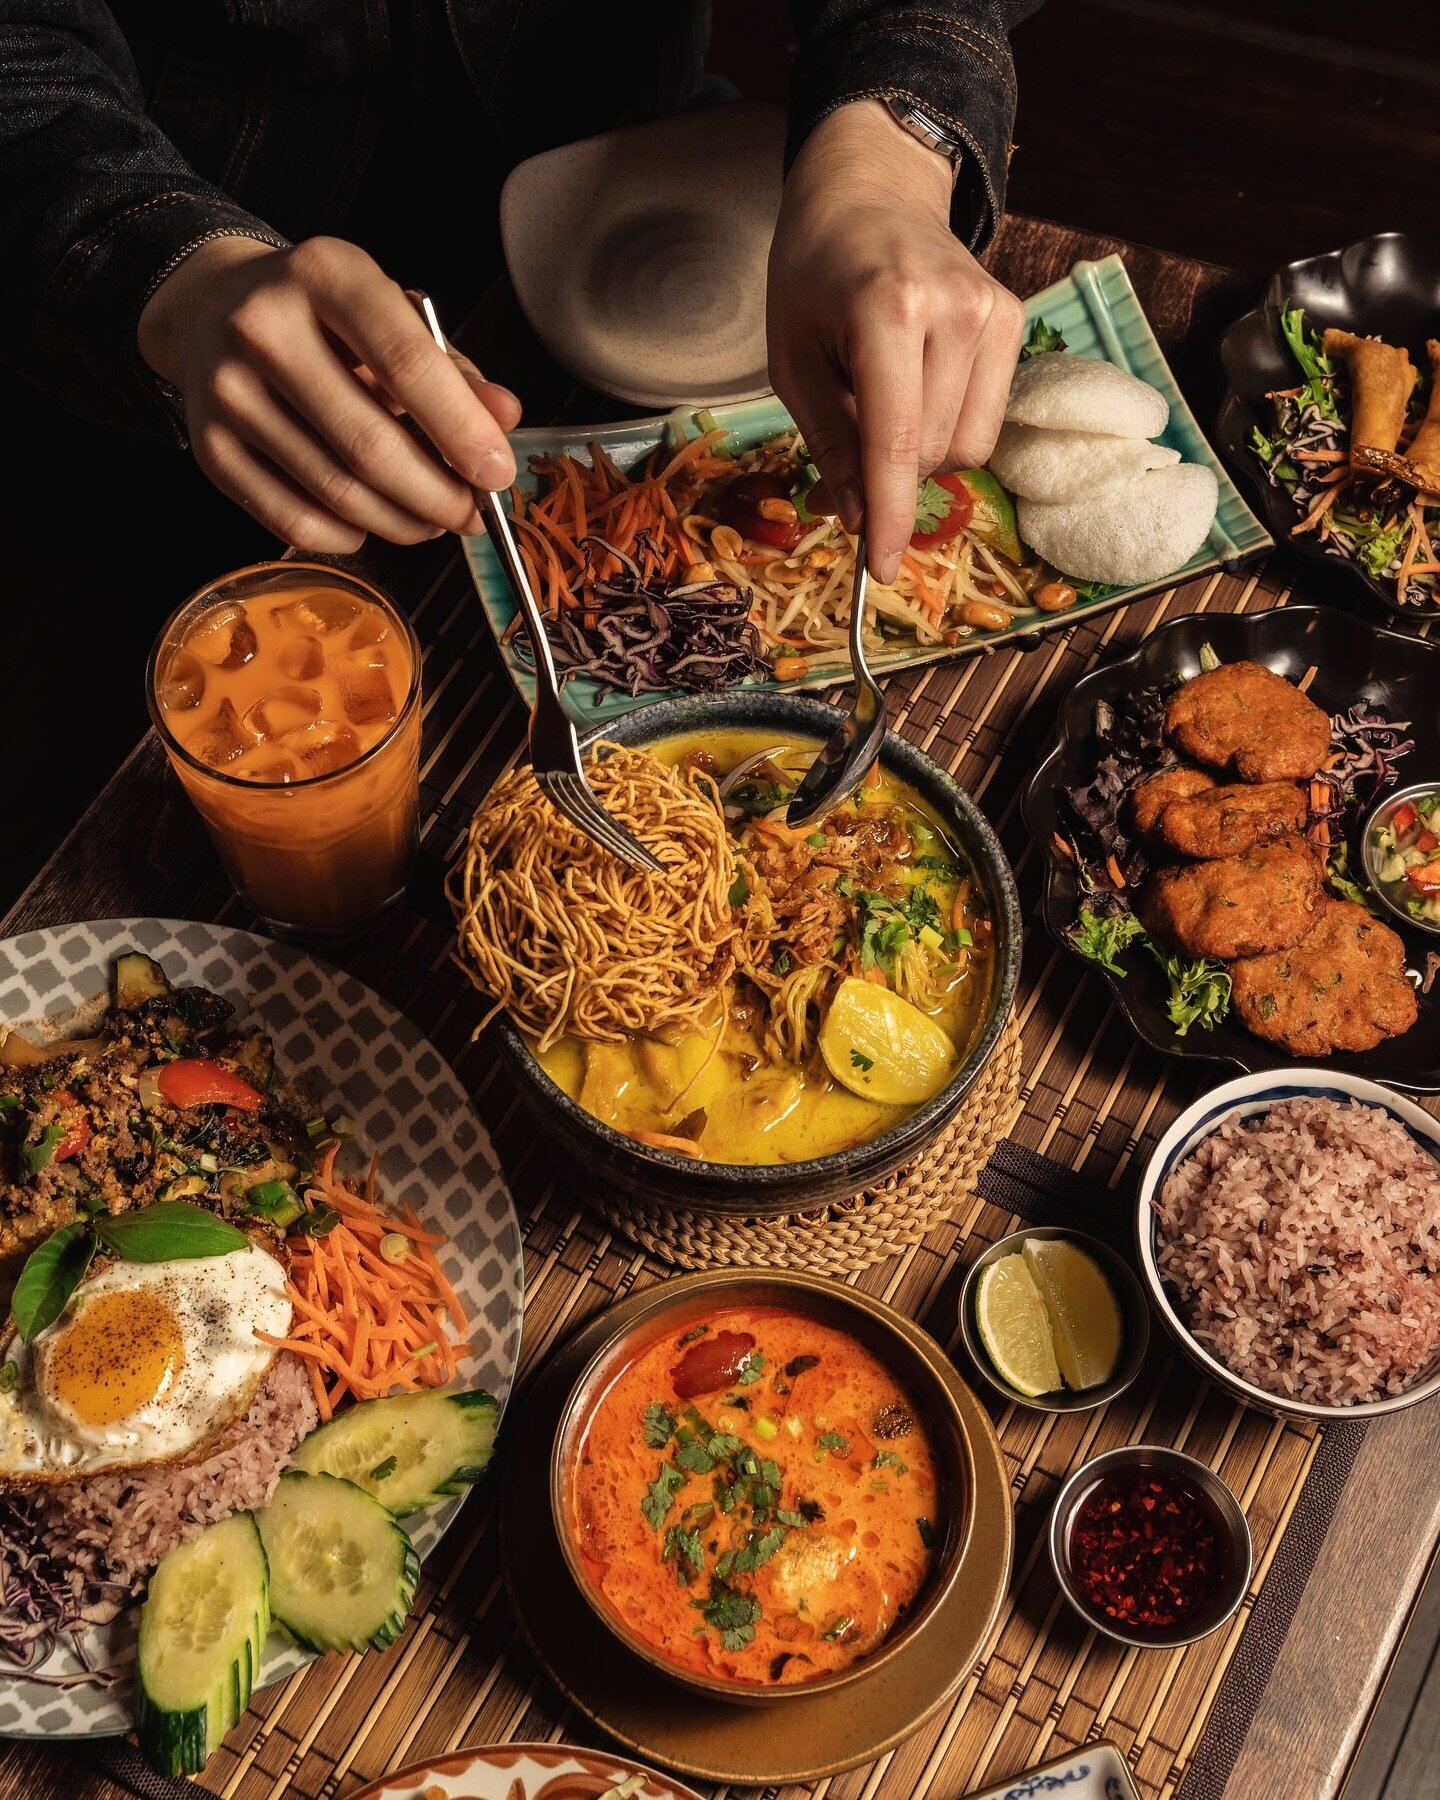 Are you feeling hungry for a Thai extravaganza? 😋🤤
Avez-vous faim d&rsquo;un festin tha&iuml;landais ? ✨✨
- - - - - - -
Reserve Your Table on Libro https://www.shushuthai.ca
Order Online / Commandez En Ligne
- - - - - - - 
Ubereats - @shushuthai
Ue